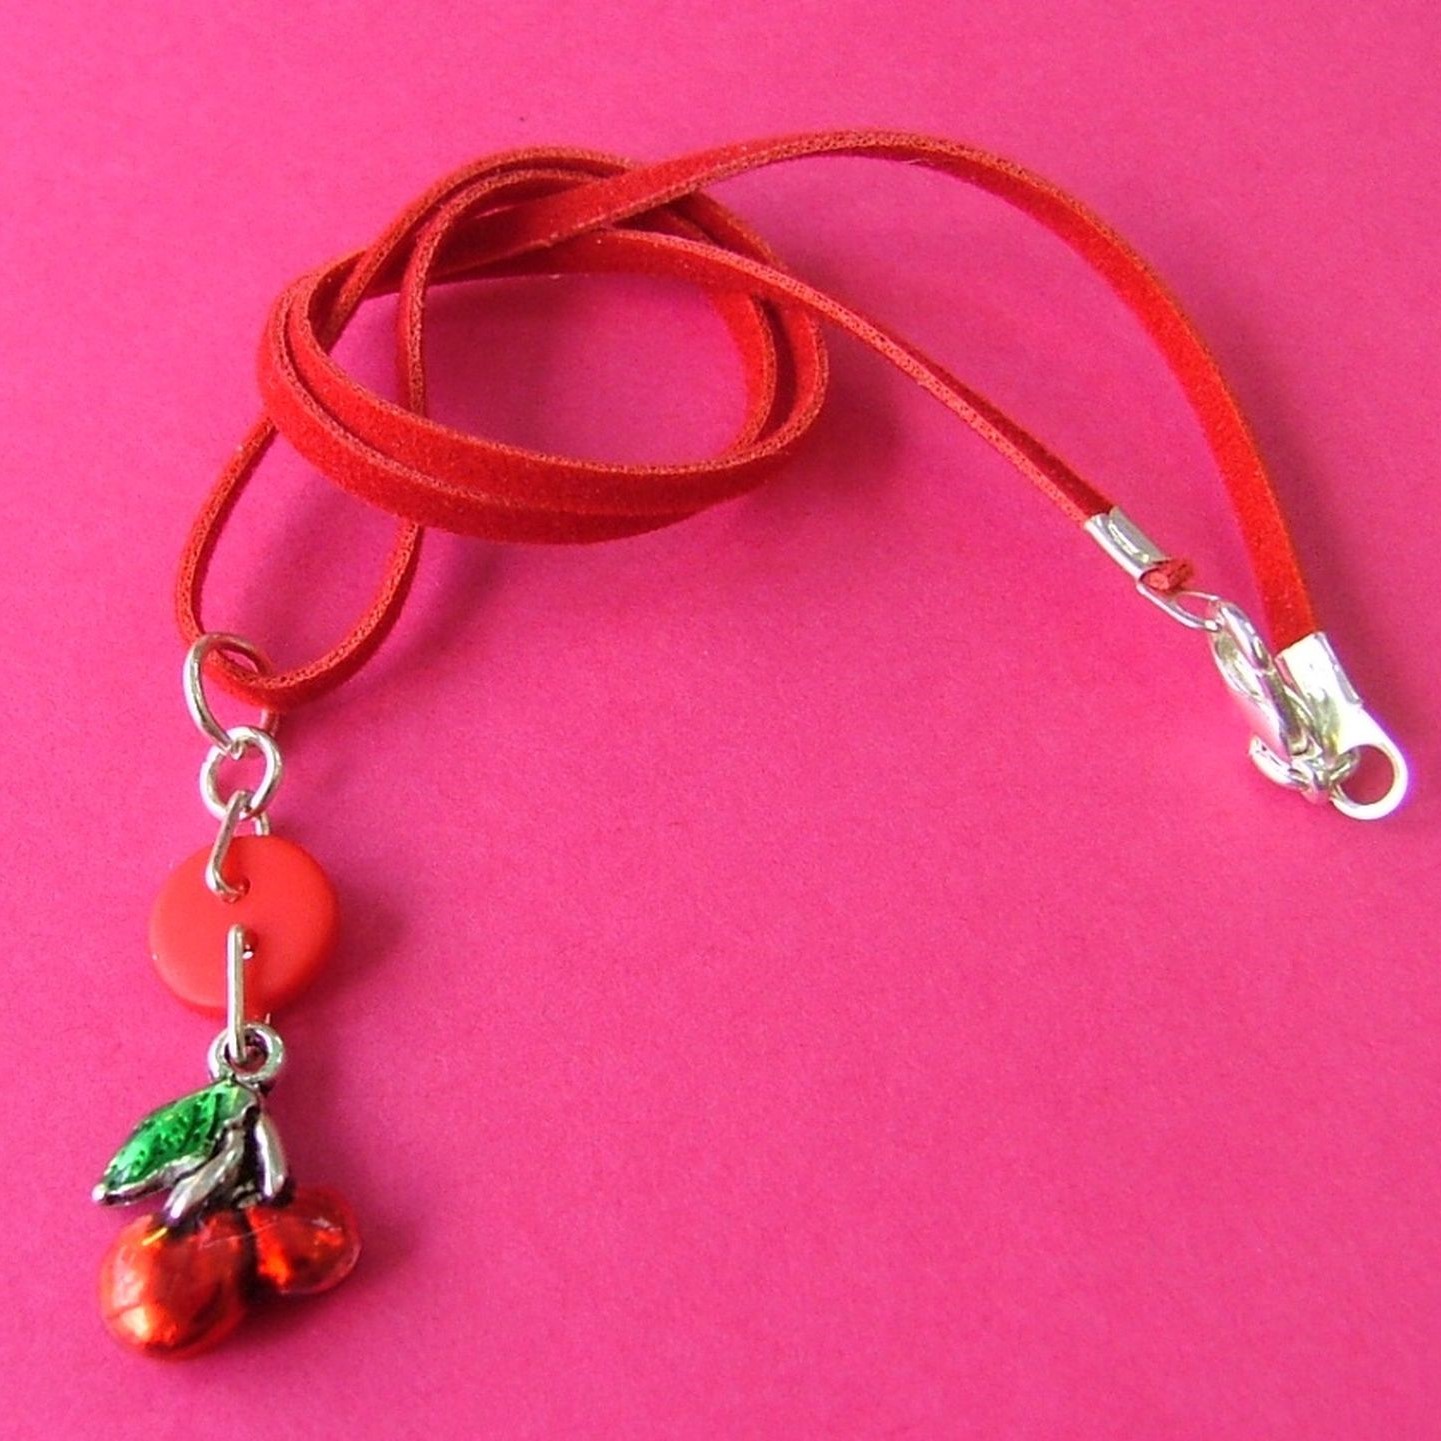 Cherry Child’s Button Charm Necklace